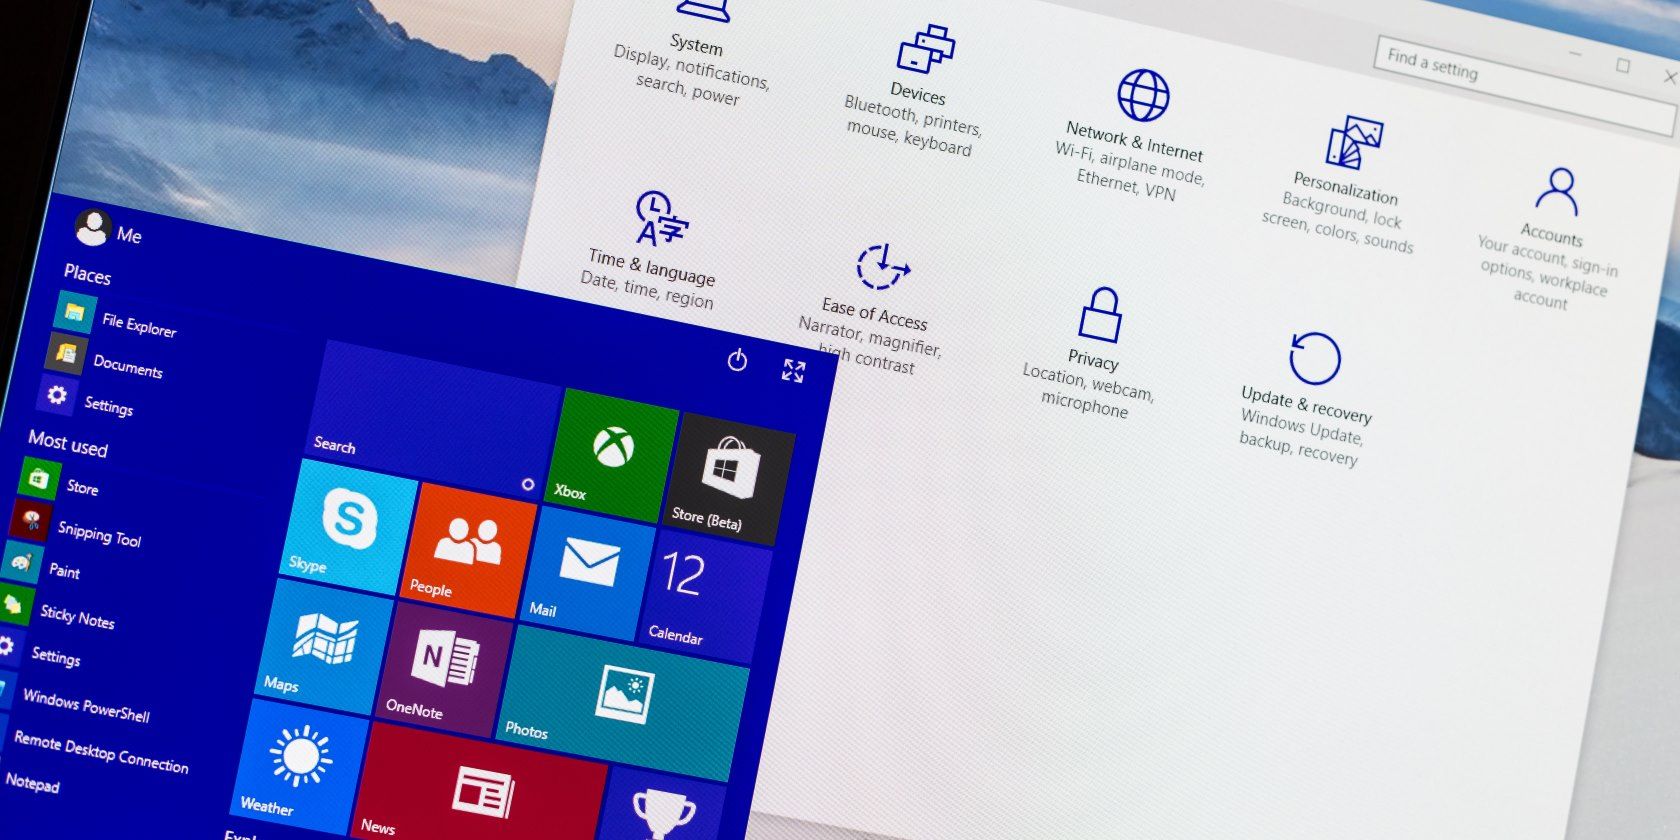 The Windows 10 UI